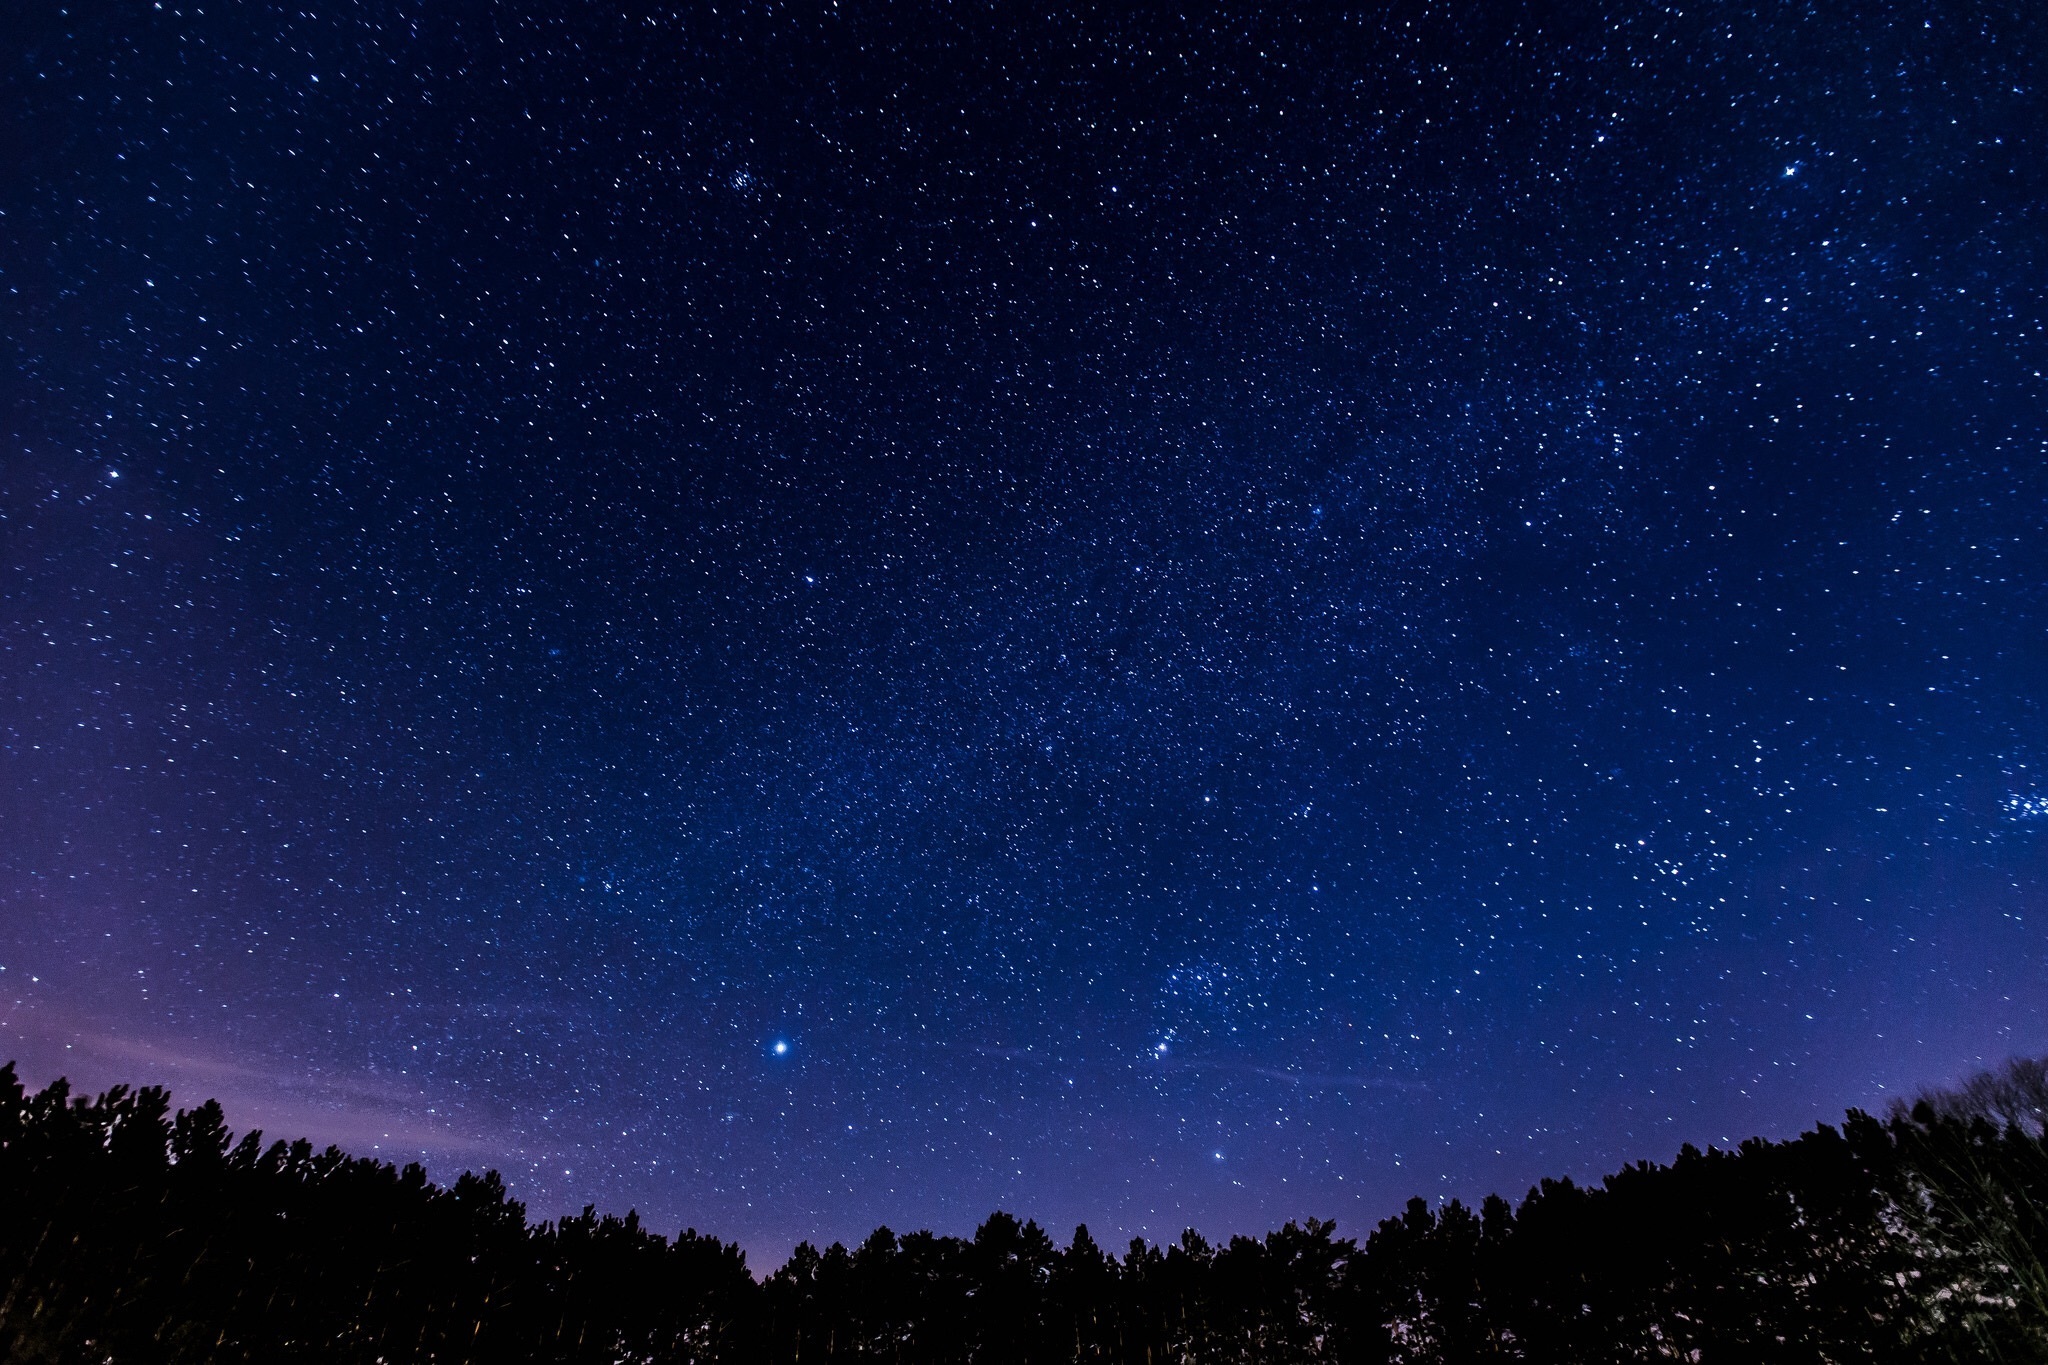 File:Turgutreis Nighttime Sky.jpg - Wikipedia